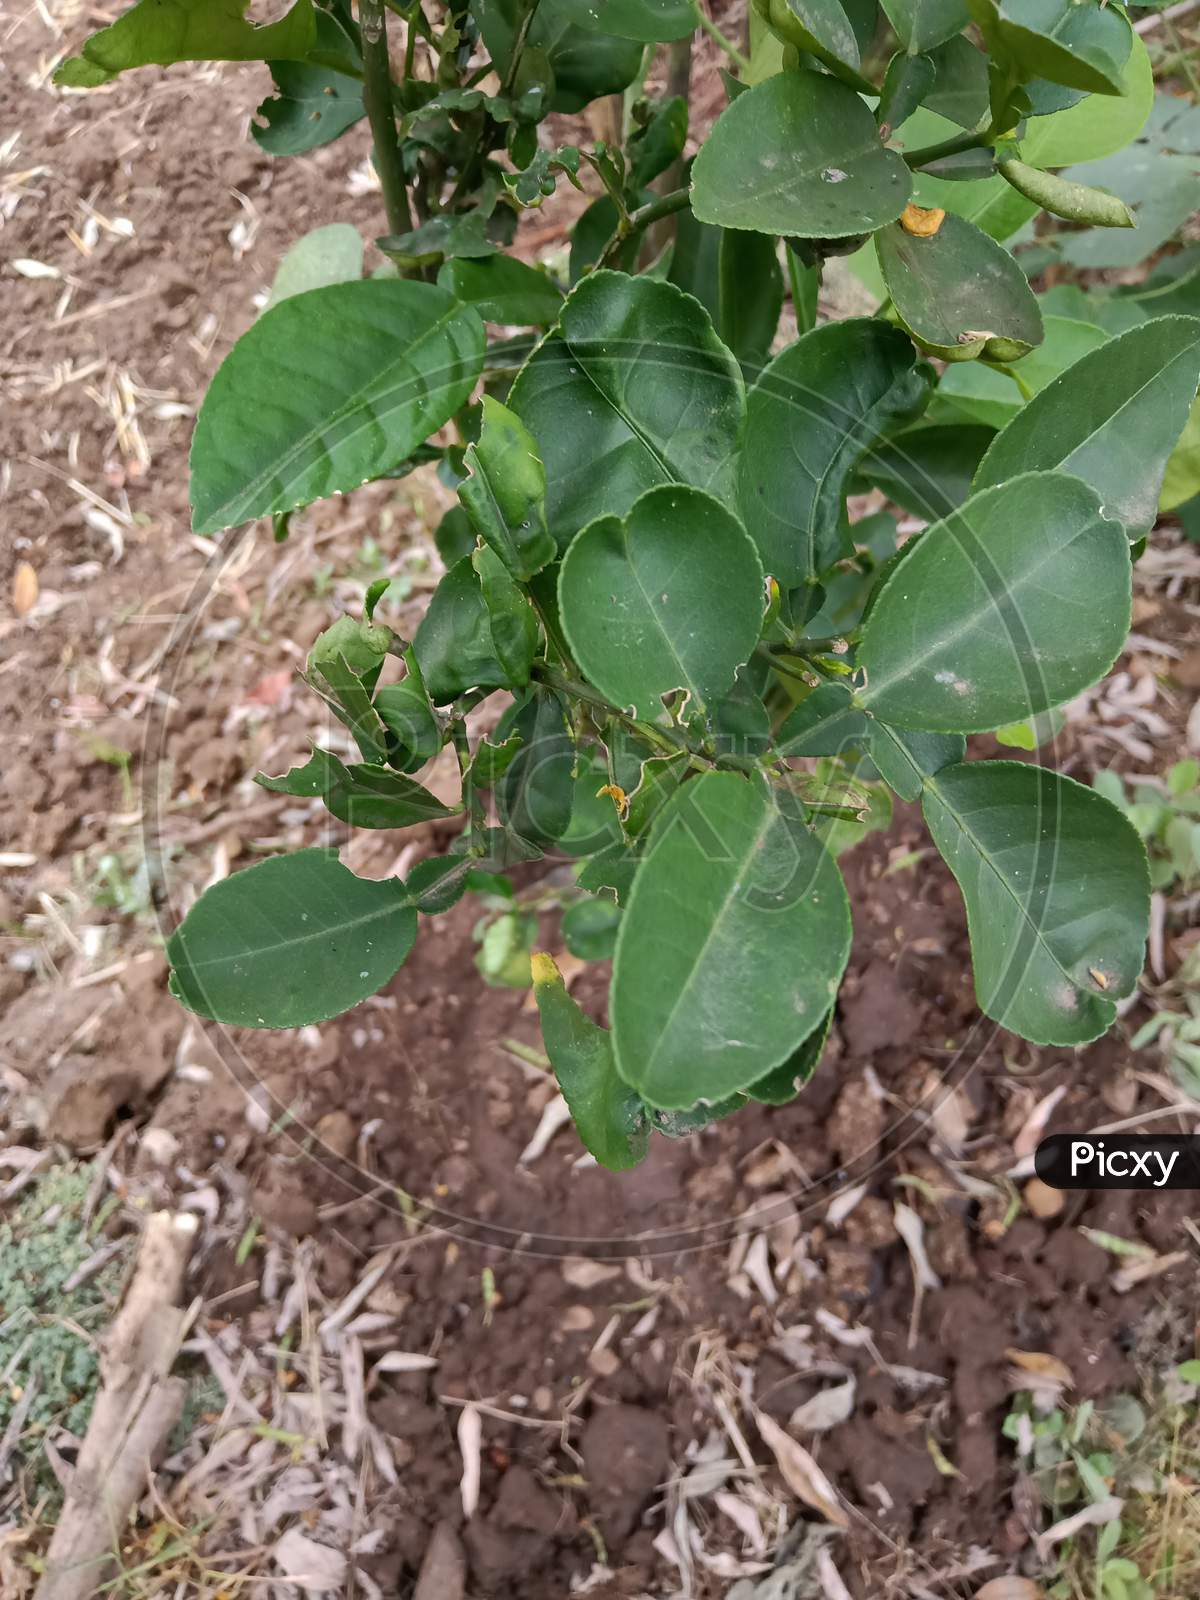 Lemon trees are attacked by insects in farm, लिंबाच्या झाडांना किडीने हल्ला केला आहे